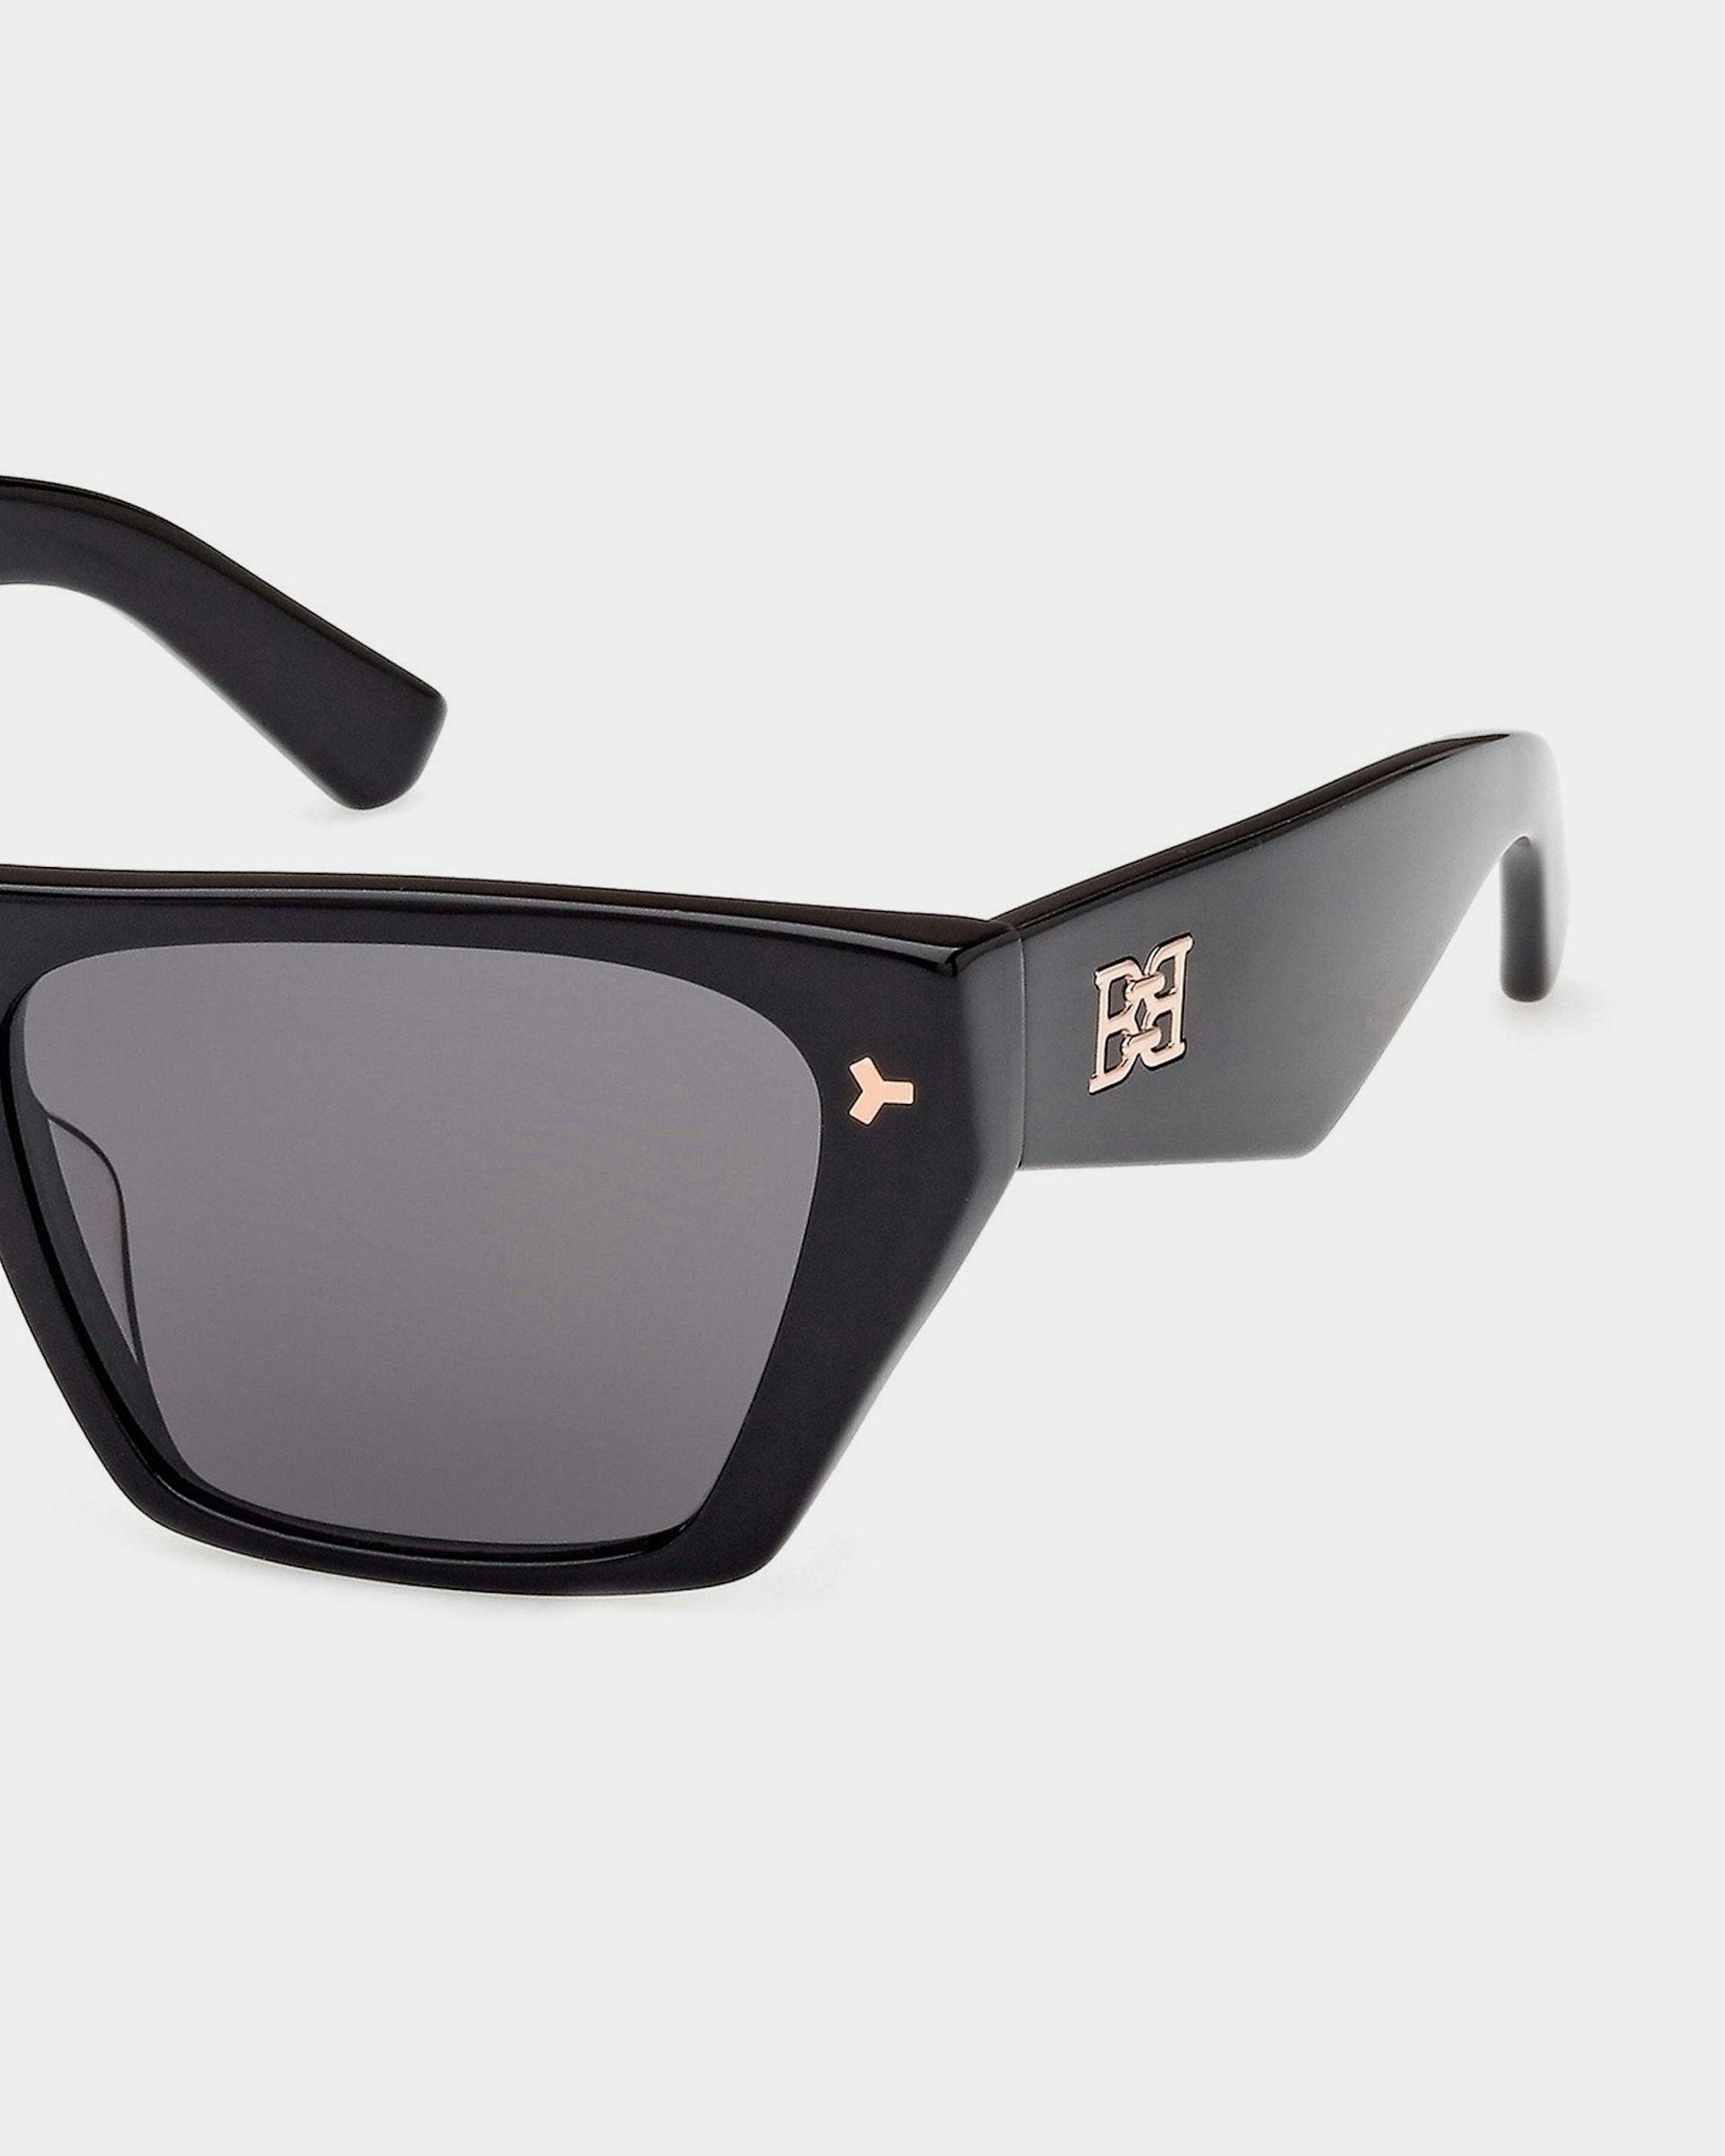 Ashley Geometric Full Rim Sunglasses In Black Plastic - Women's - Bally - 04